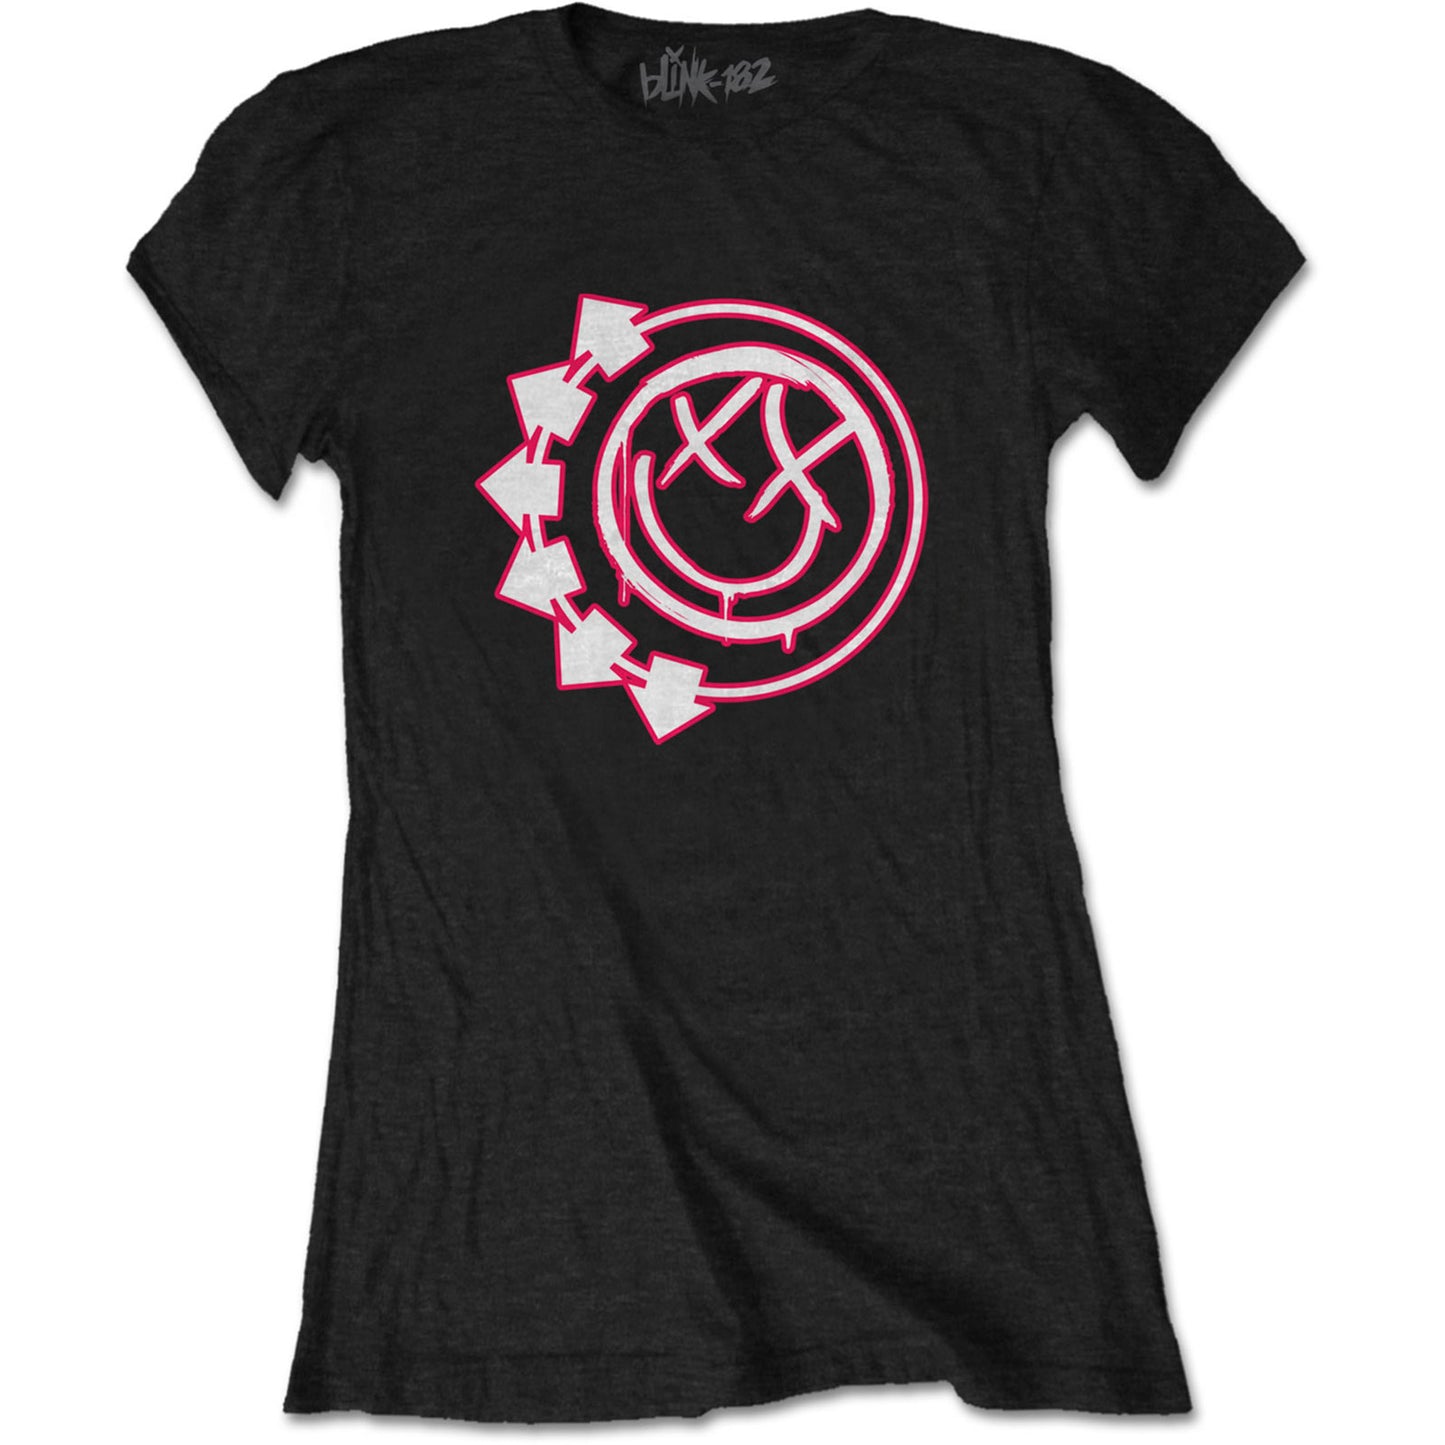 Blink-182 Ladies T-Shirt: Six Arrow Smiley